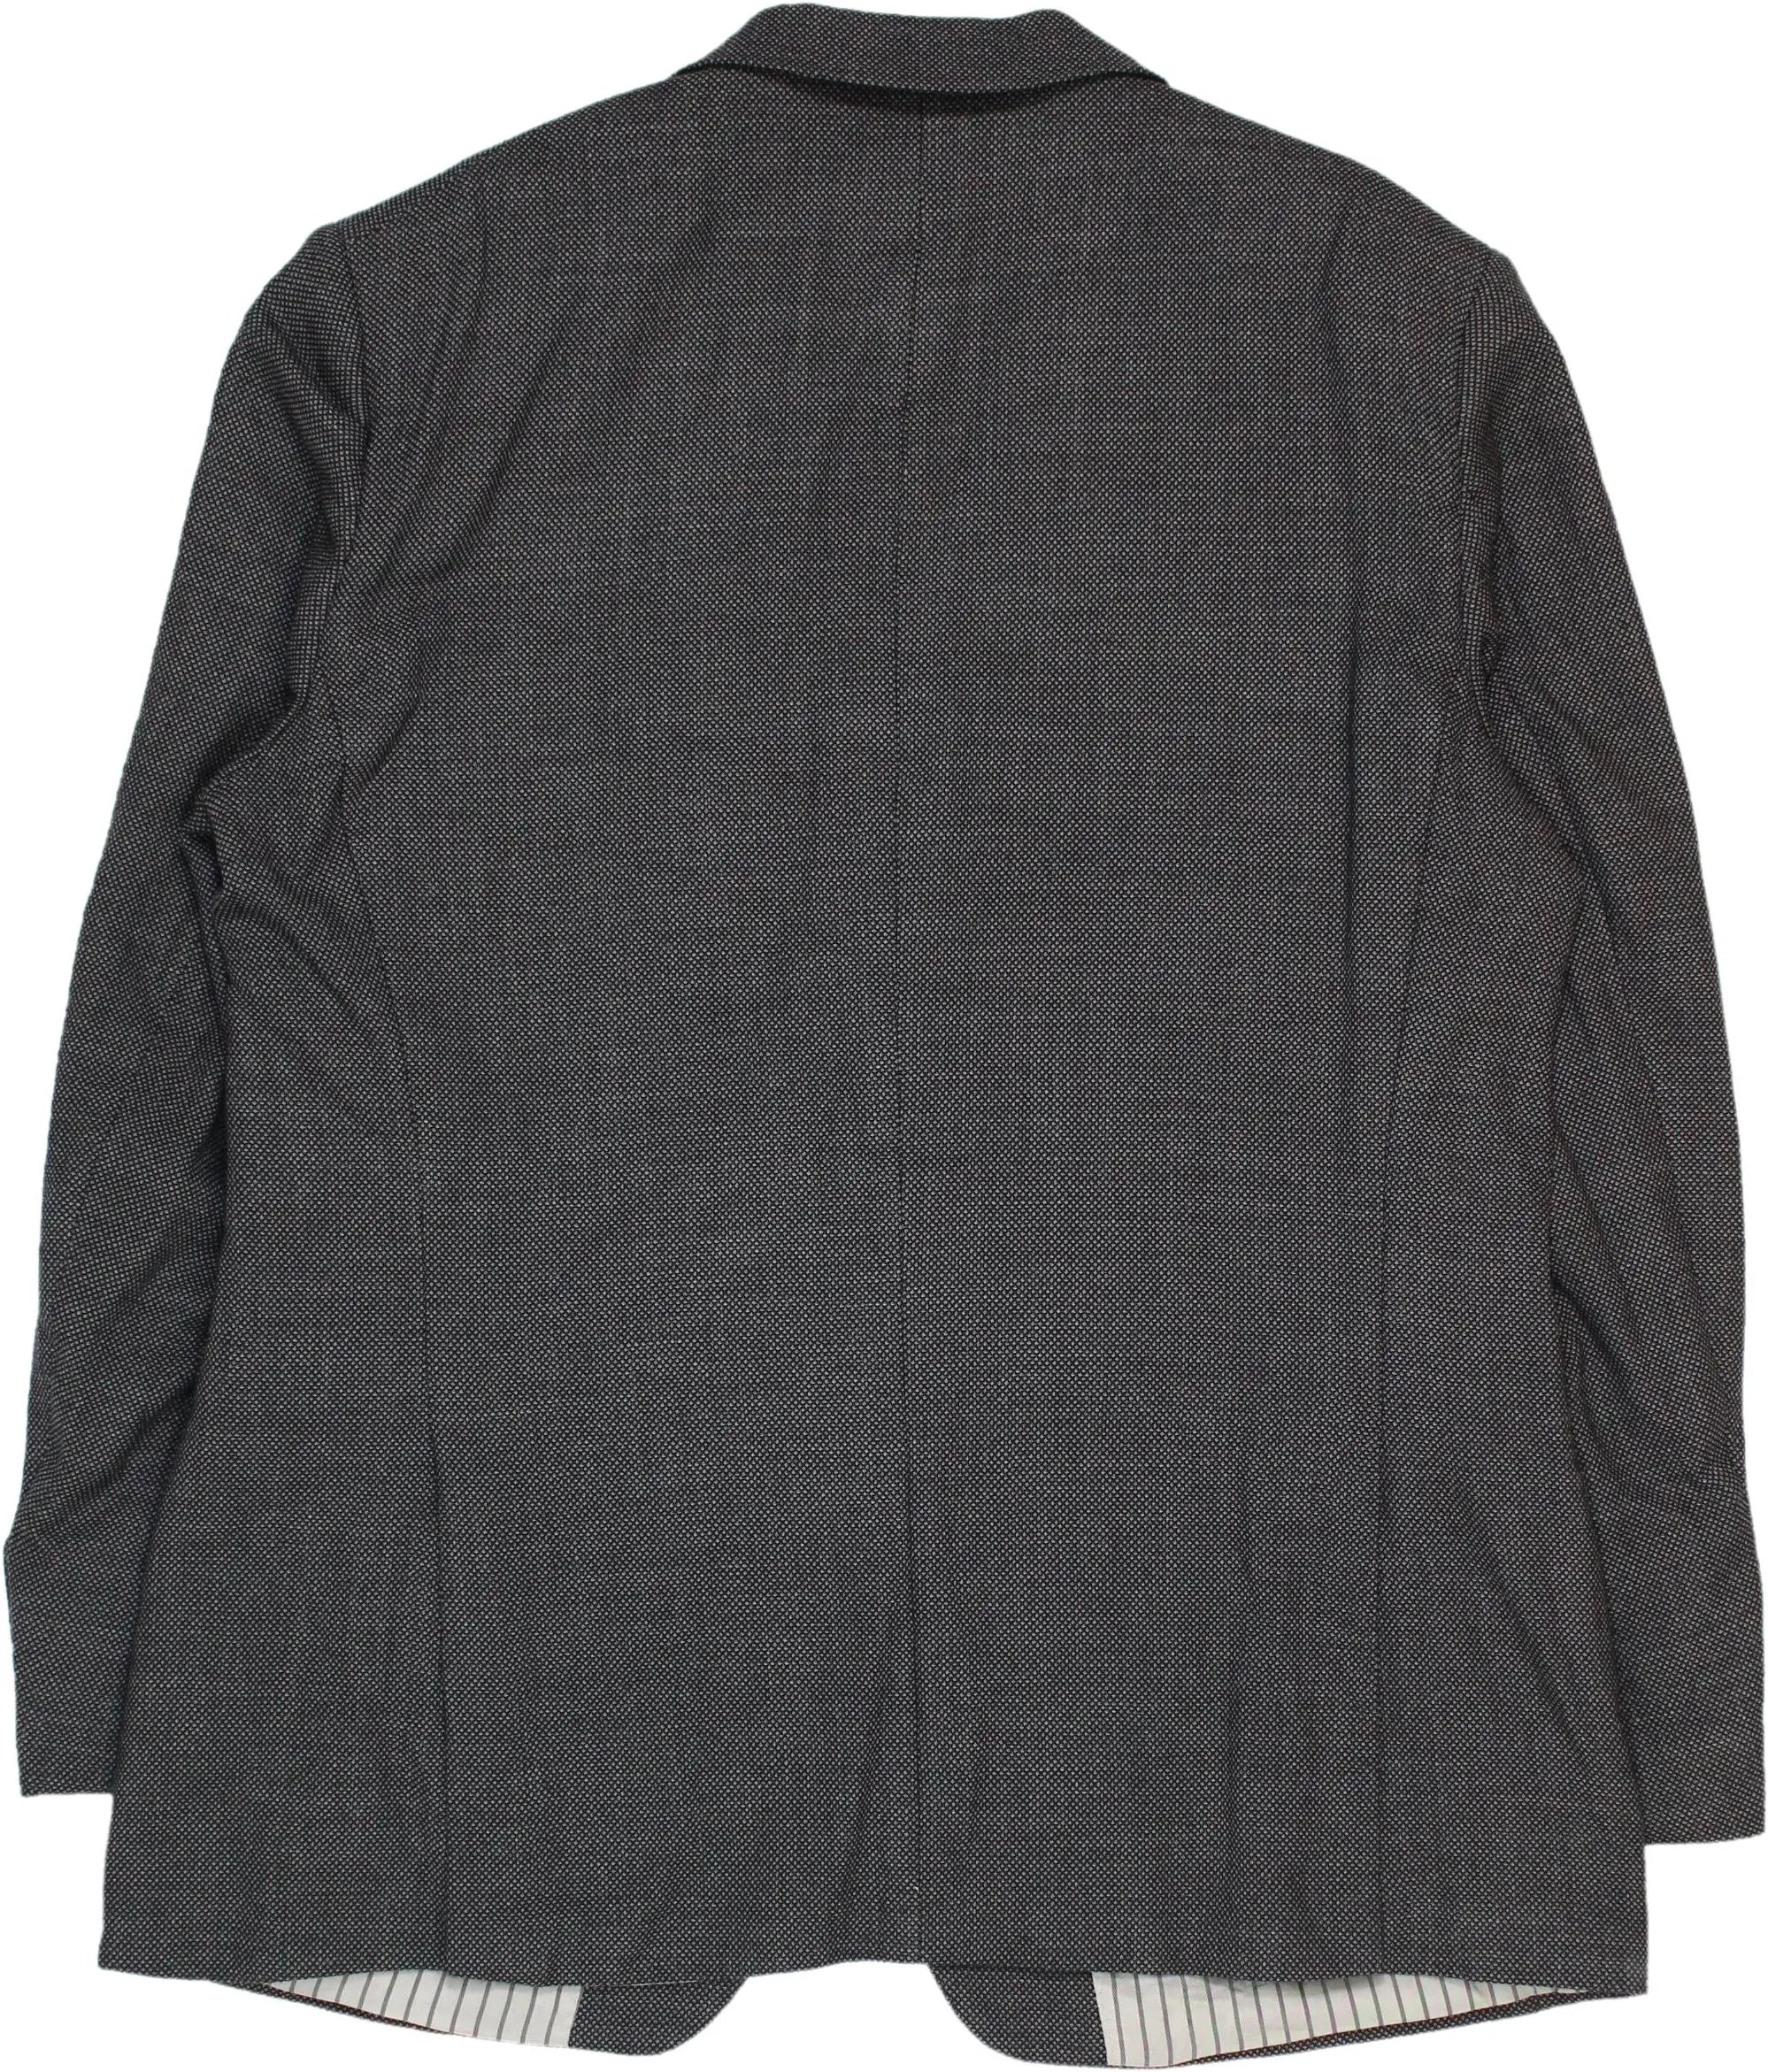 Van Gils - Grey Wool Blazer by Van Gils- ThriftTale.com - Vintage and second handclothing